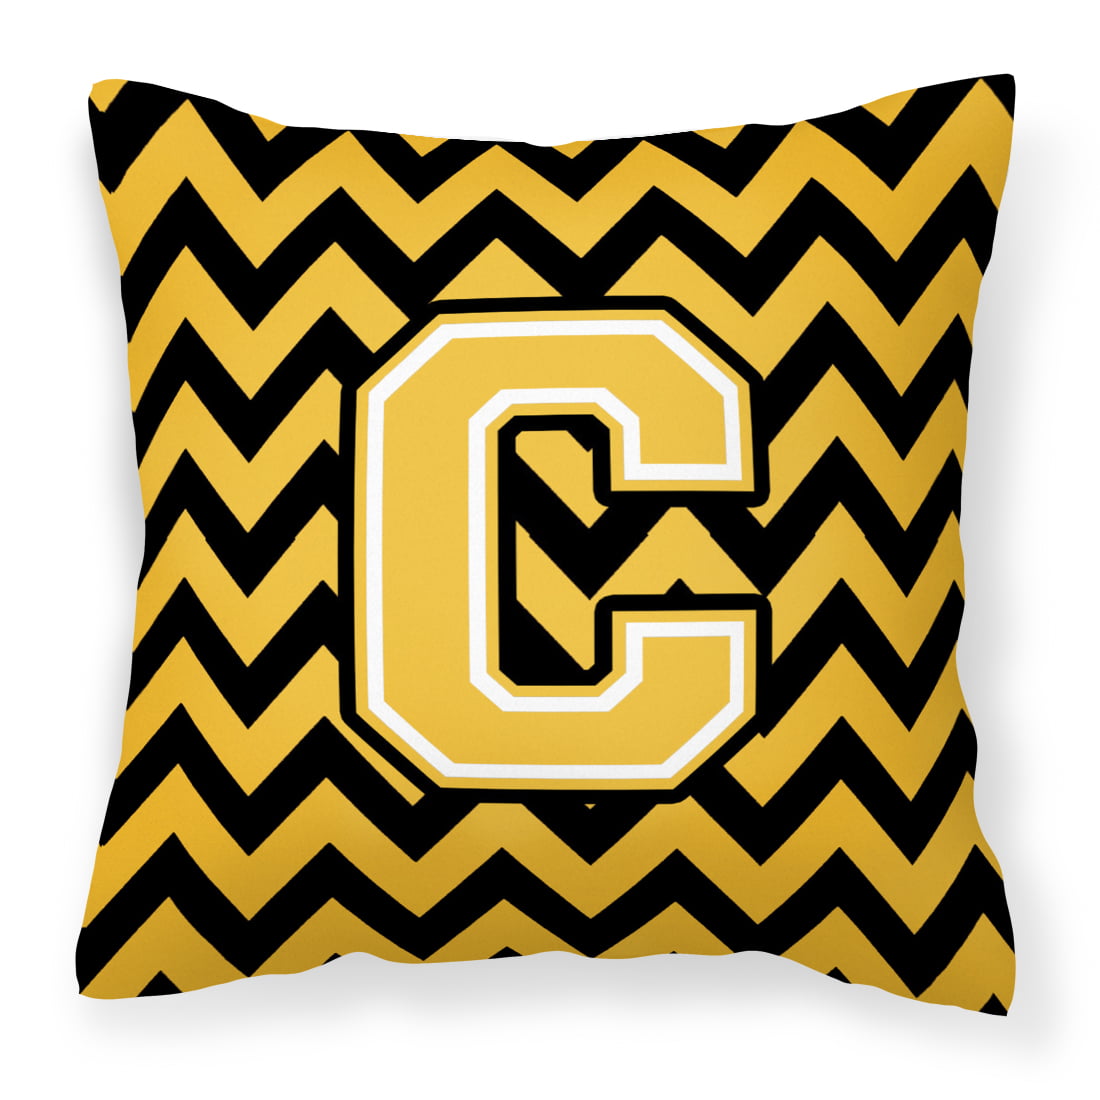 Letter C Chevron Black and Gold Fabric Decorative Pillow - Walmart.com